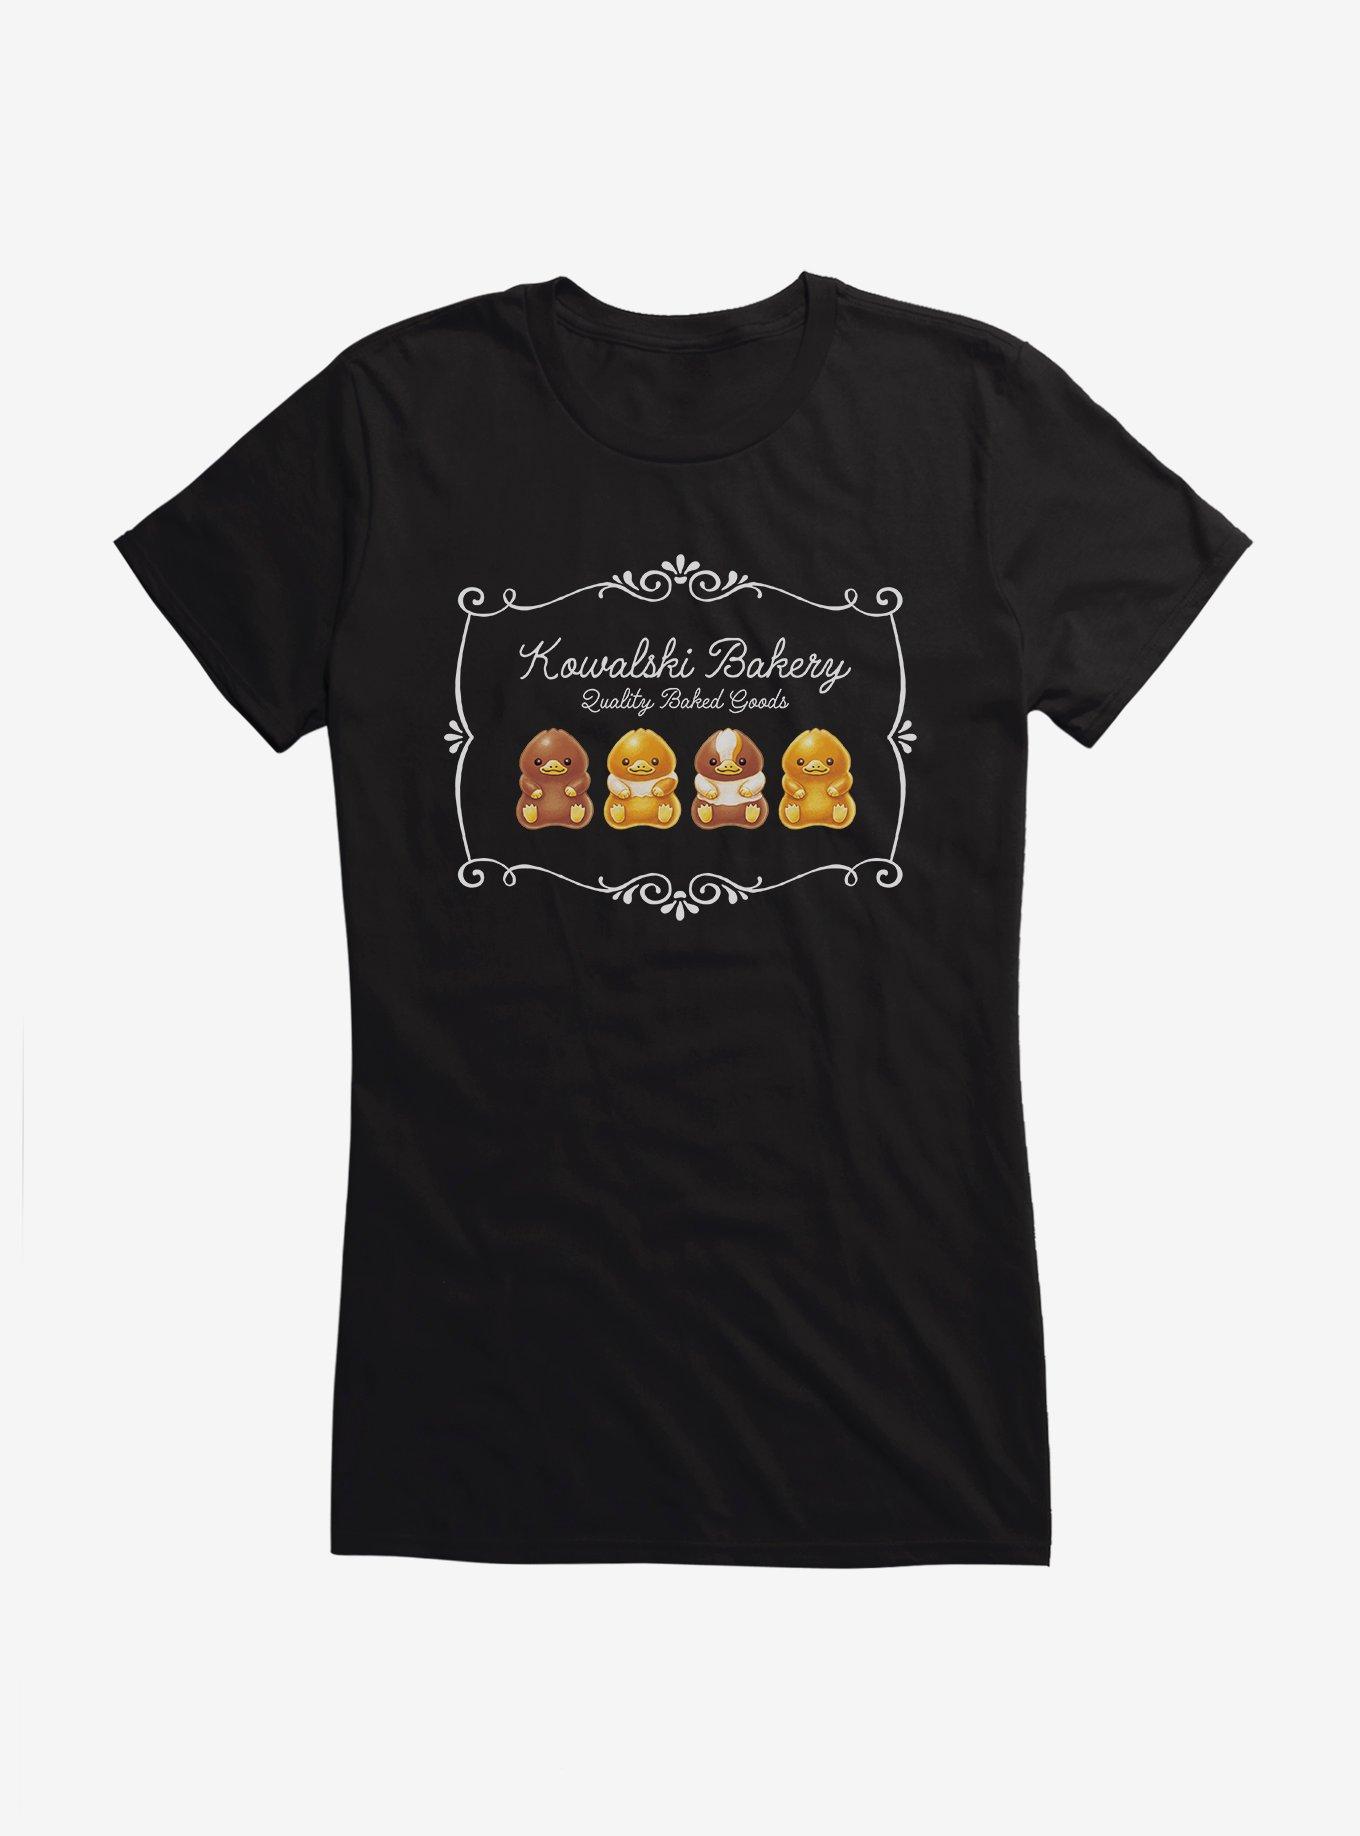 Fantastic Beasts Baby Nifflers Girls T-Shirt